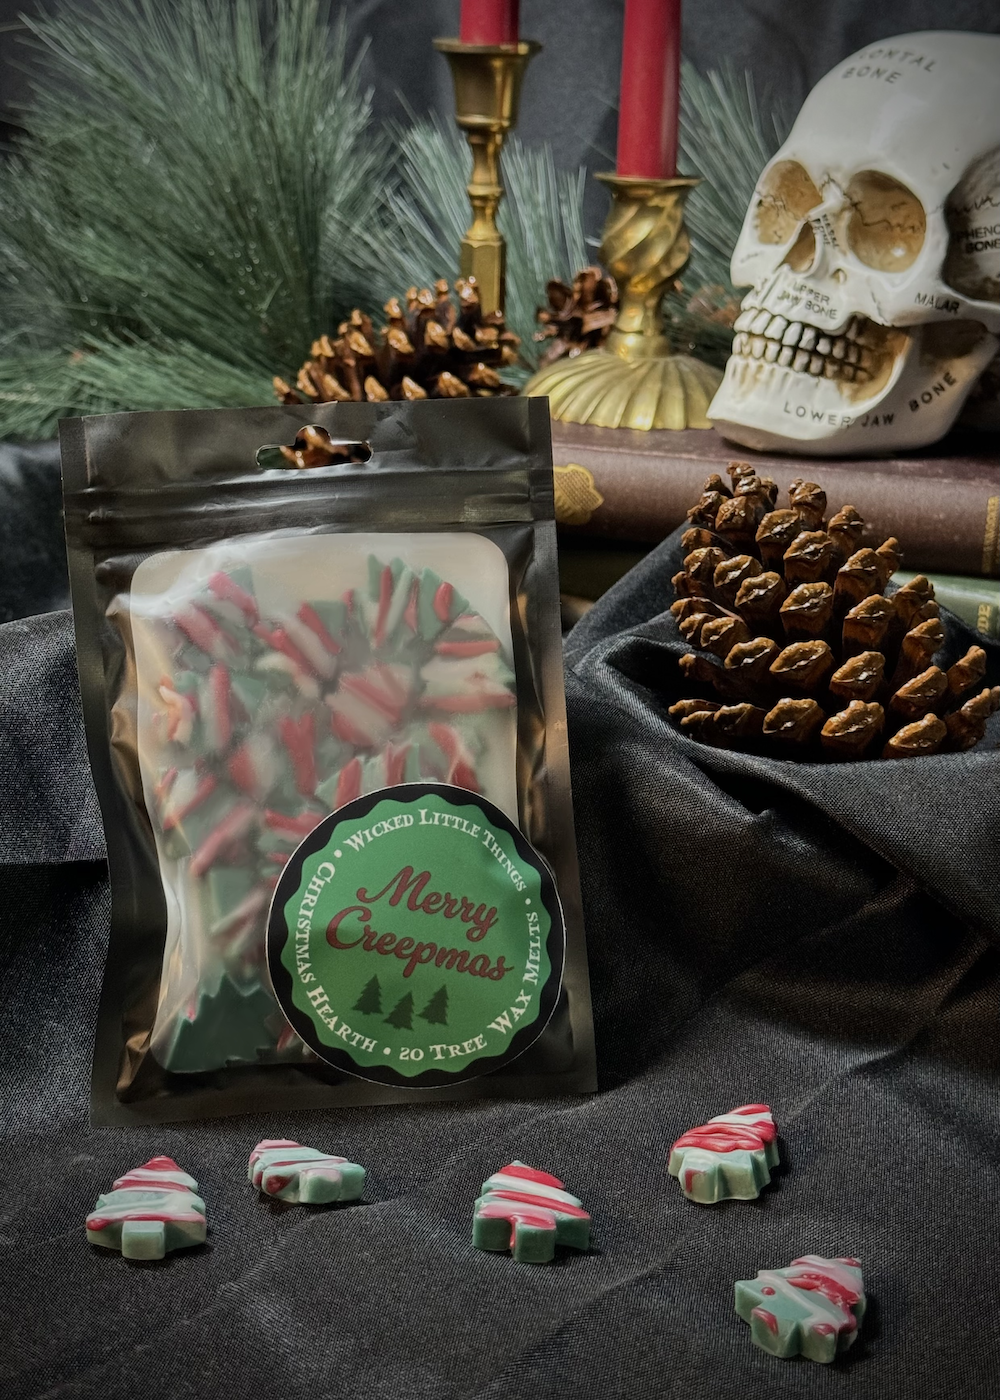 Merry Creepmas- Christmas Hearth Wax Melts